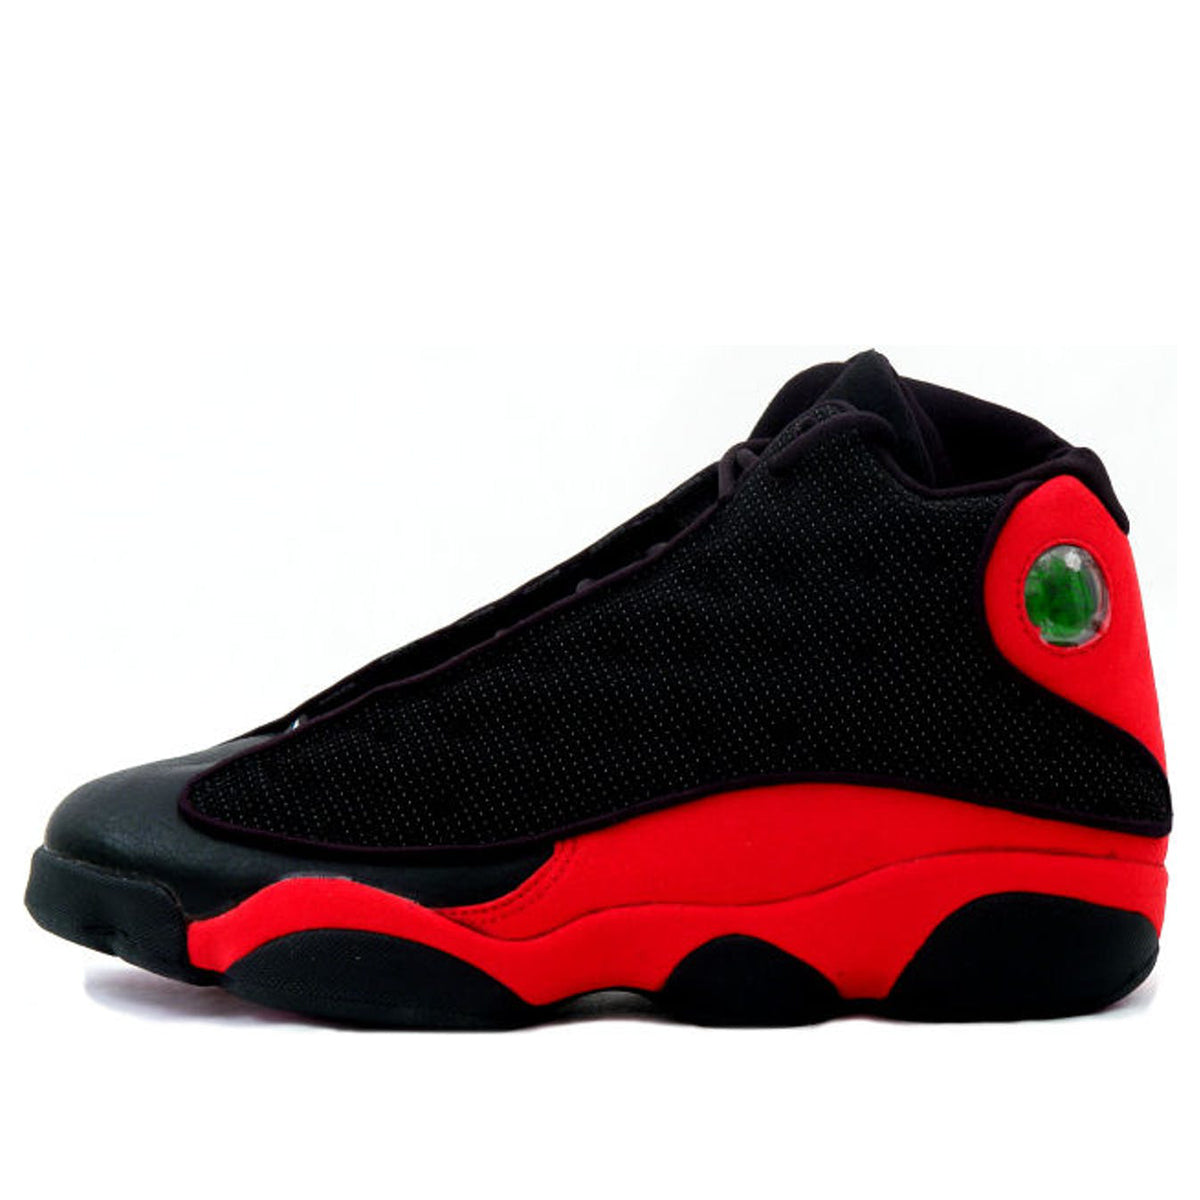 Buy Nike Mens Air Jordan Retro 13Bred Black/Varsity Red Suede Basketball  Shoes Size 13 at